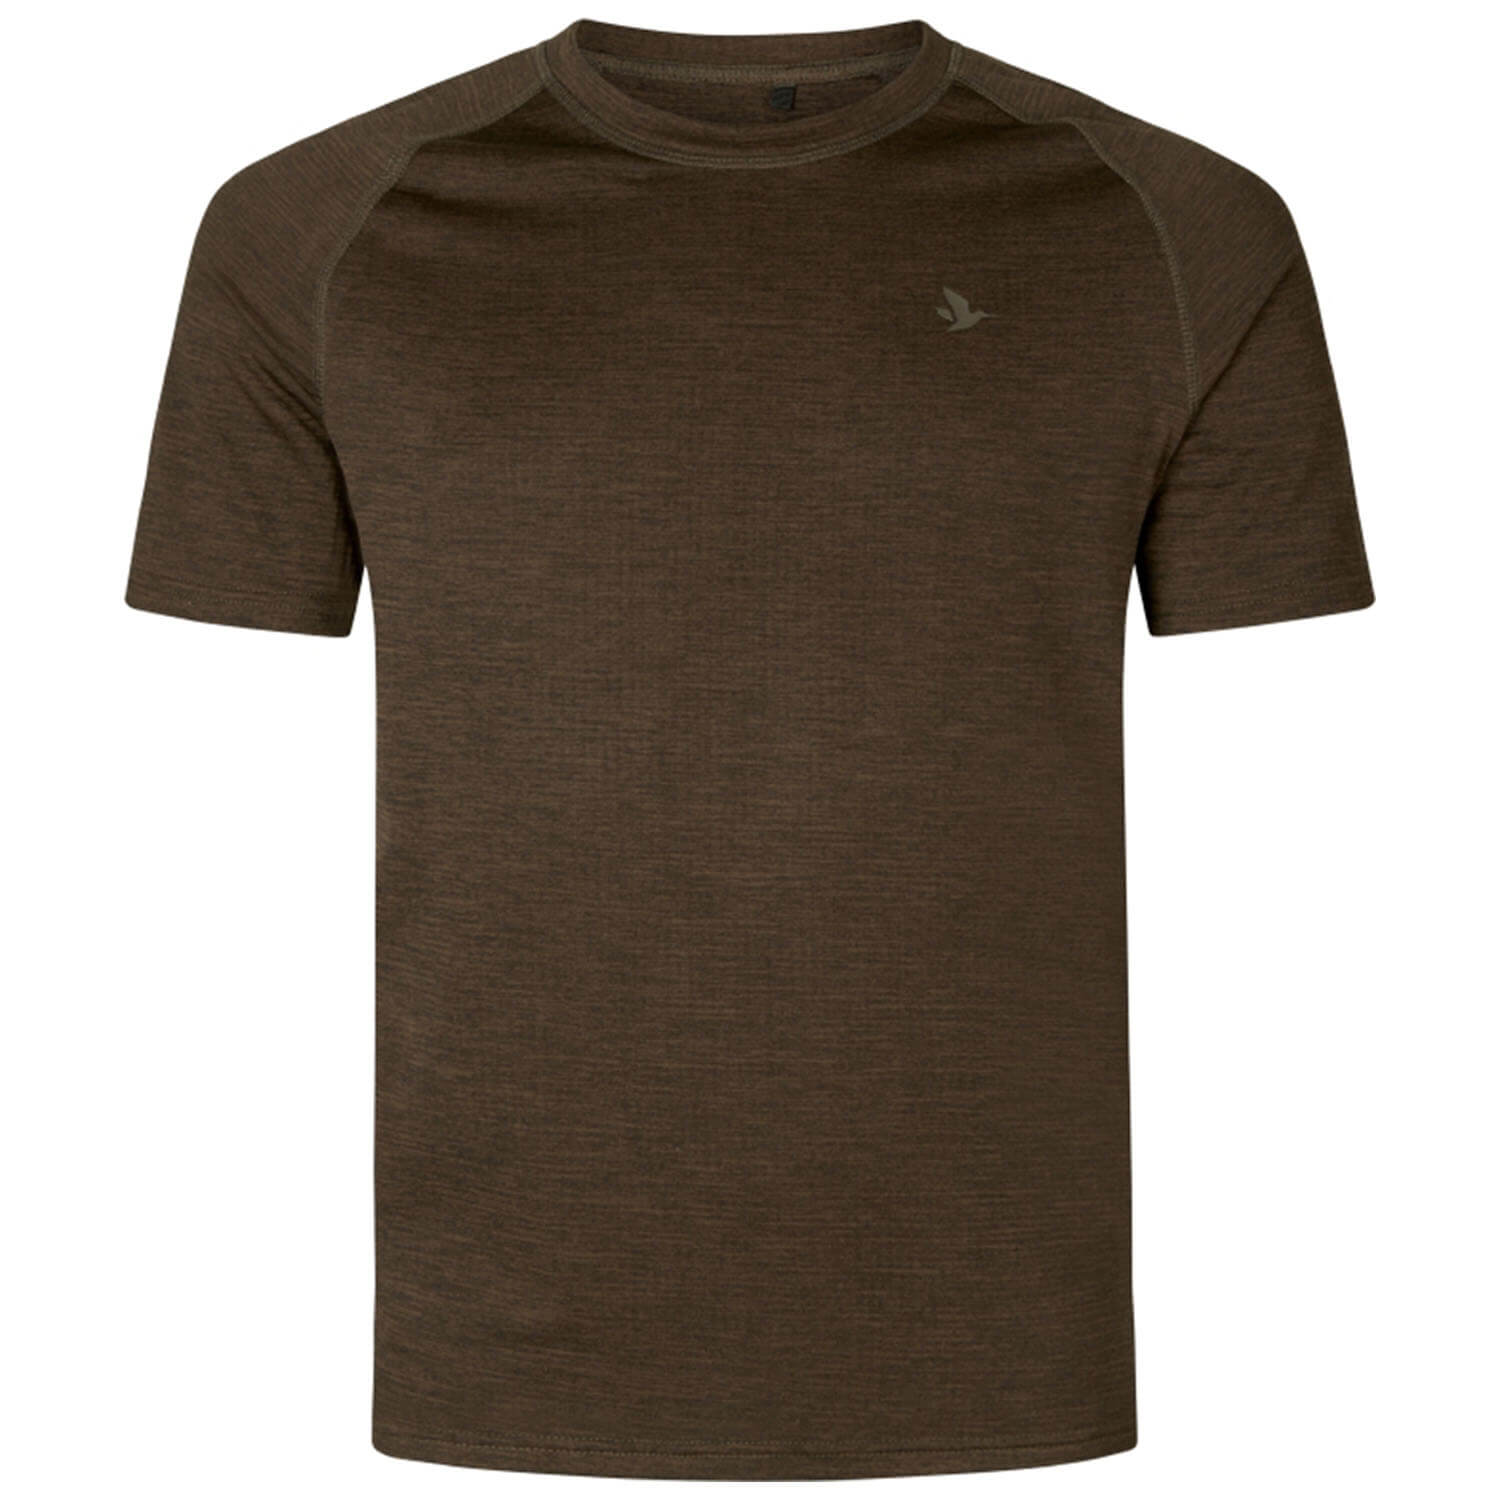 Seeland T-shirt Active (demitasse brown)